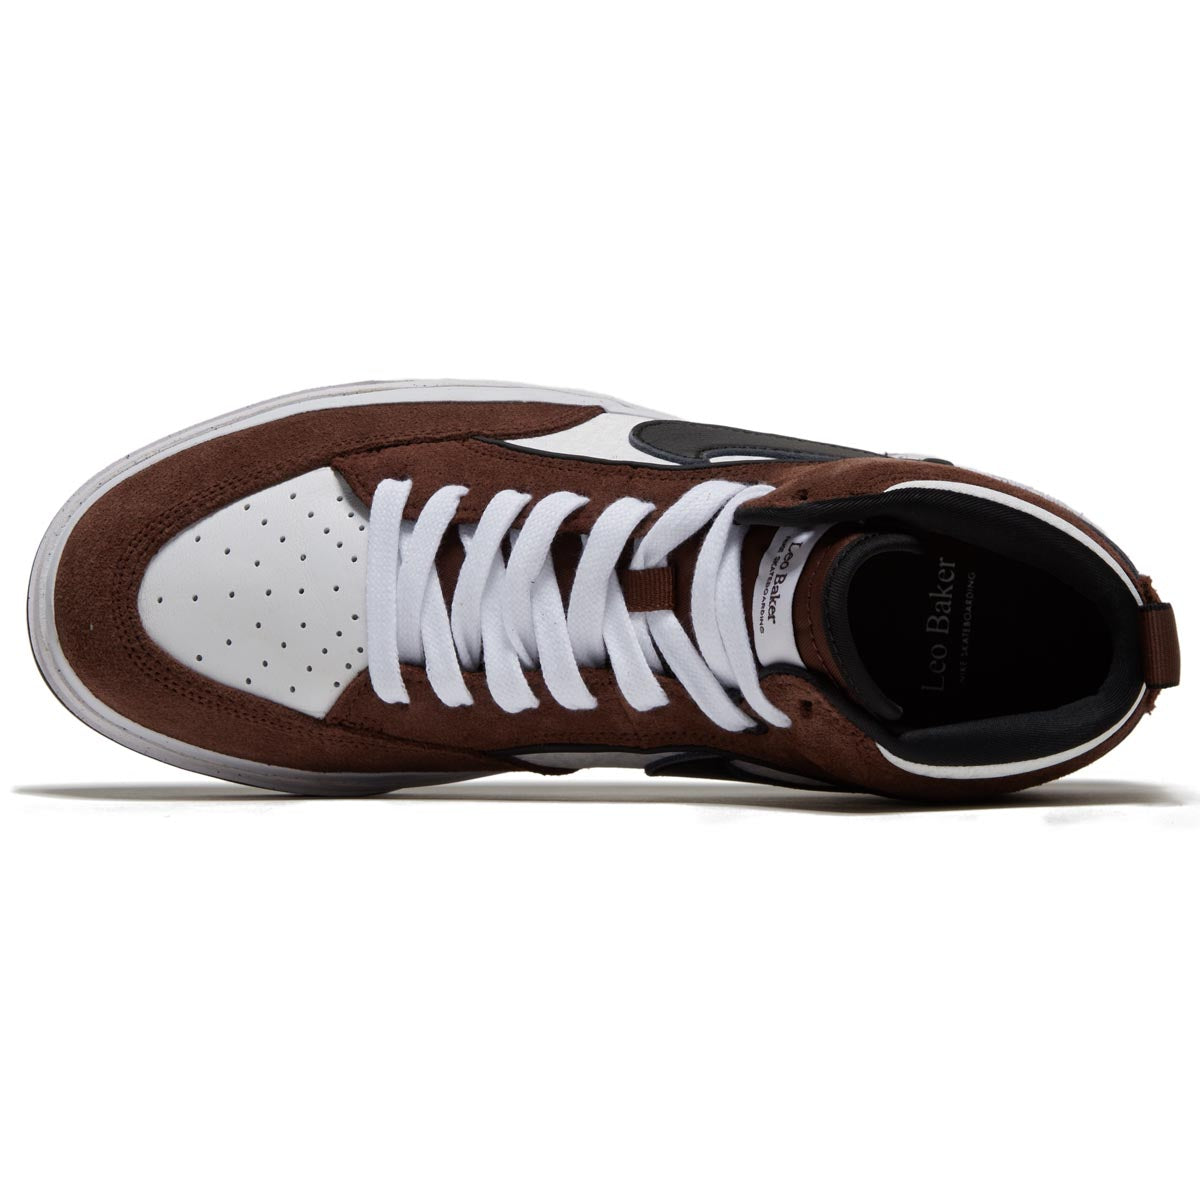 Nike SB React Leo Shoes - Light Chocolate/Black/White/Black image 3